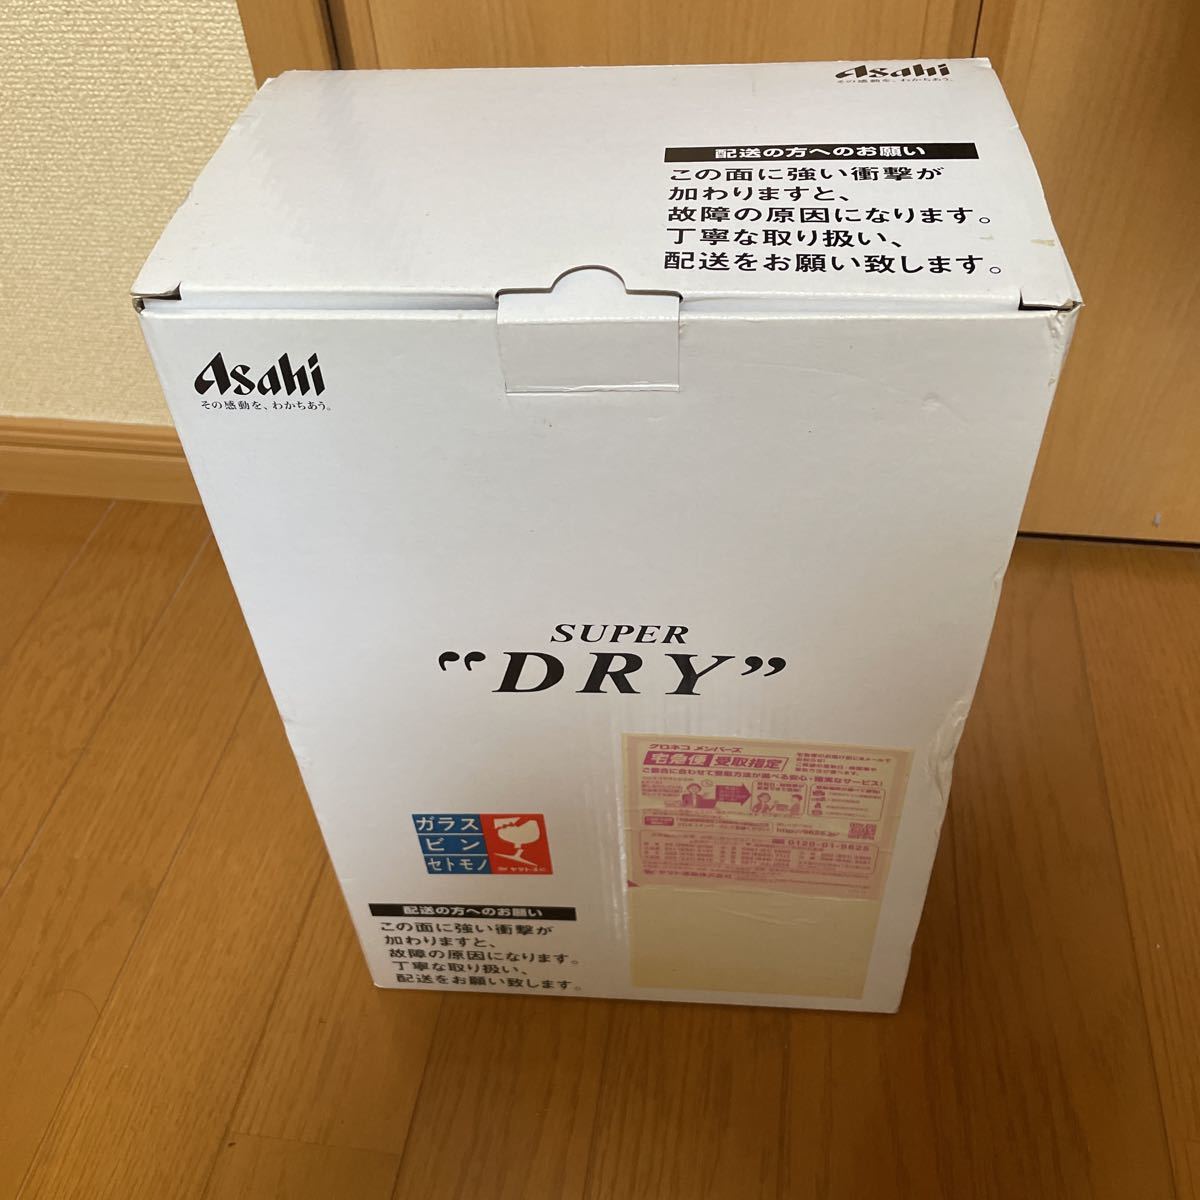 * free shipping * Asahi super dry creamy can server 